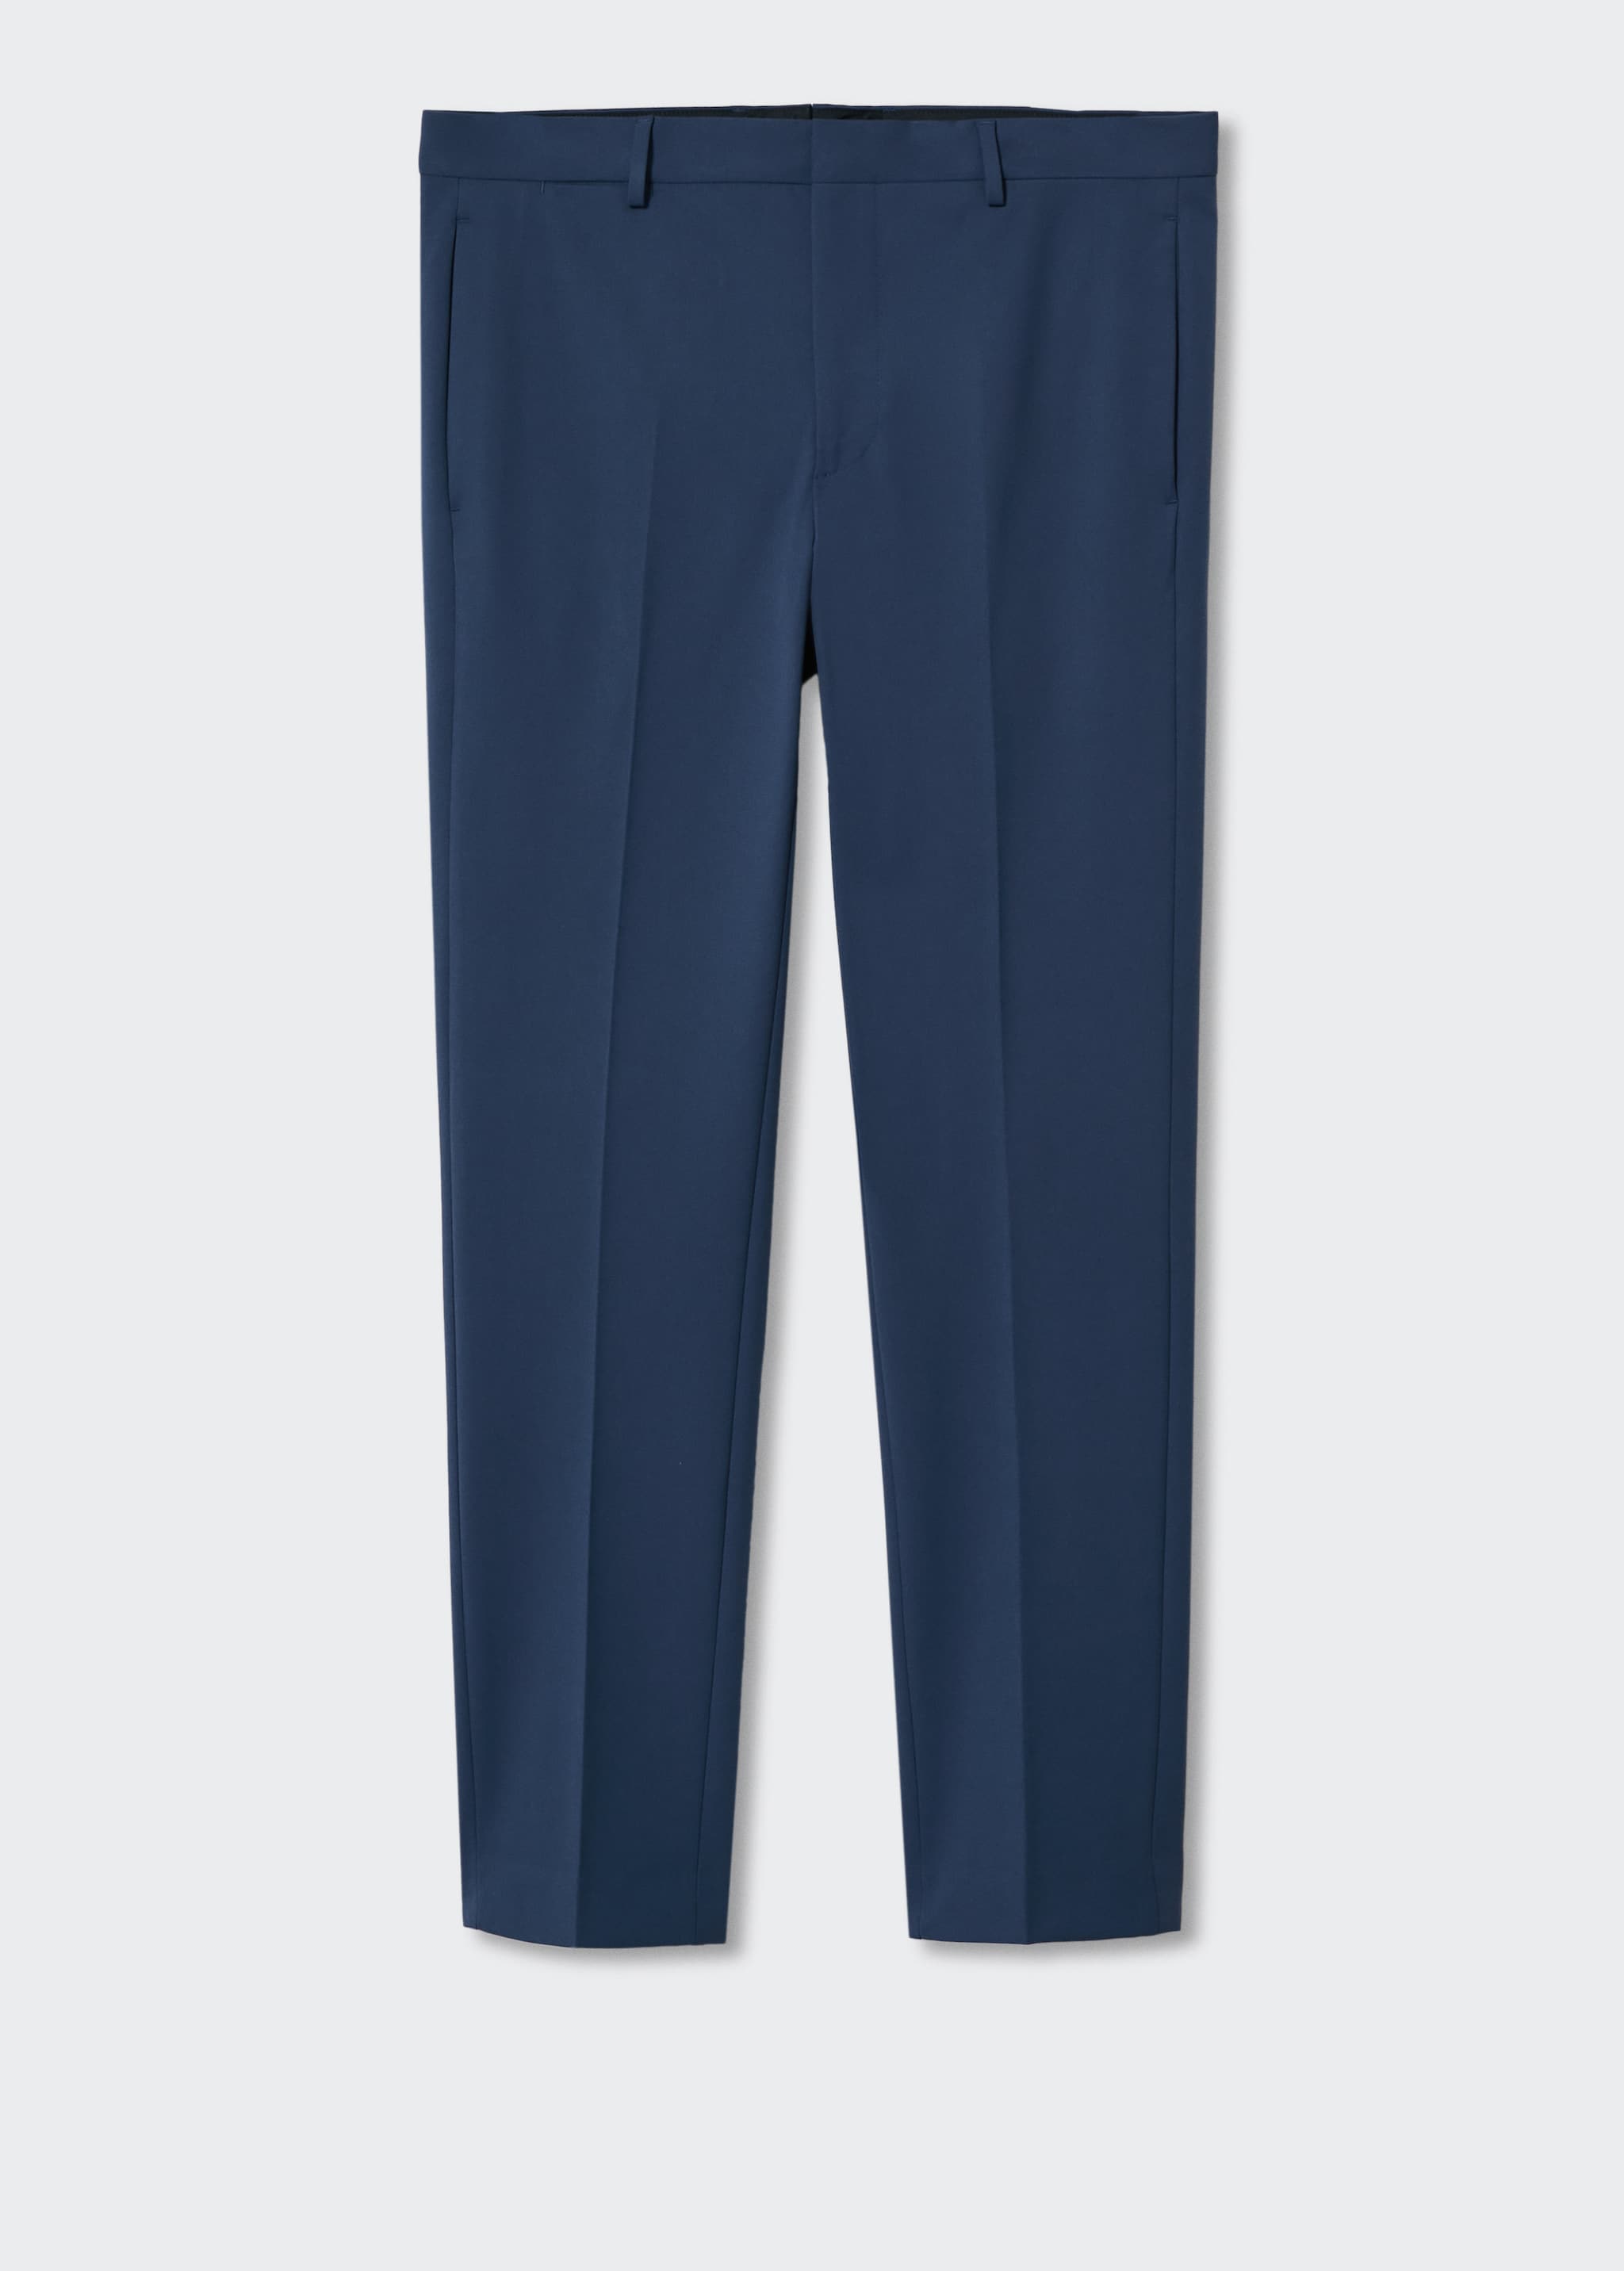 Pantalons vestir súper slim fit - Article sense model